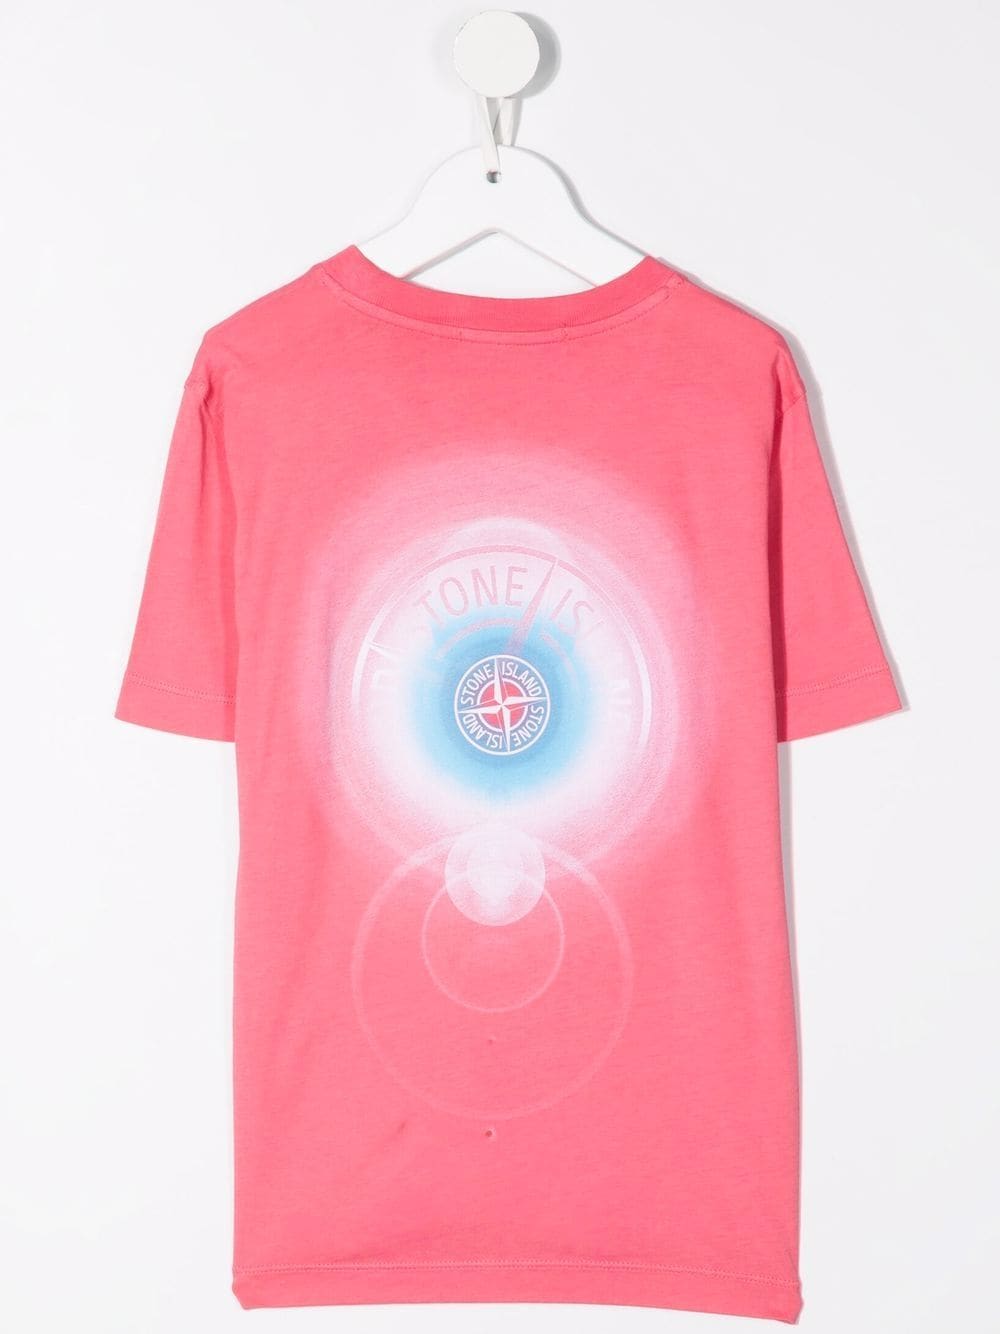 STONE ISLAND KIDS  Logo T-Shirt Pink - MAISONDEFASHION.COM